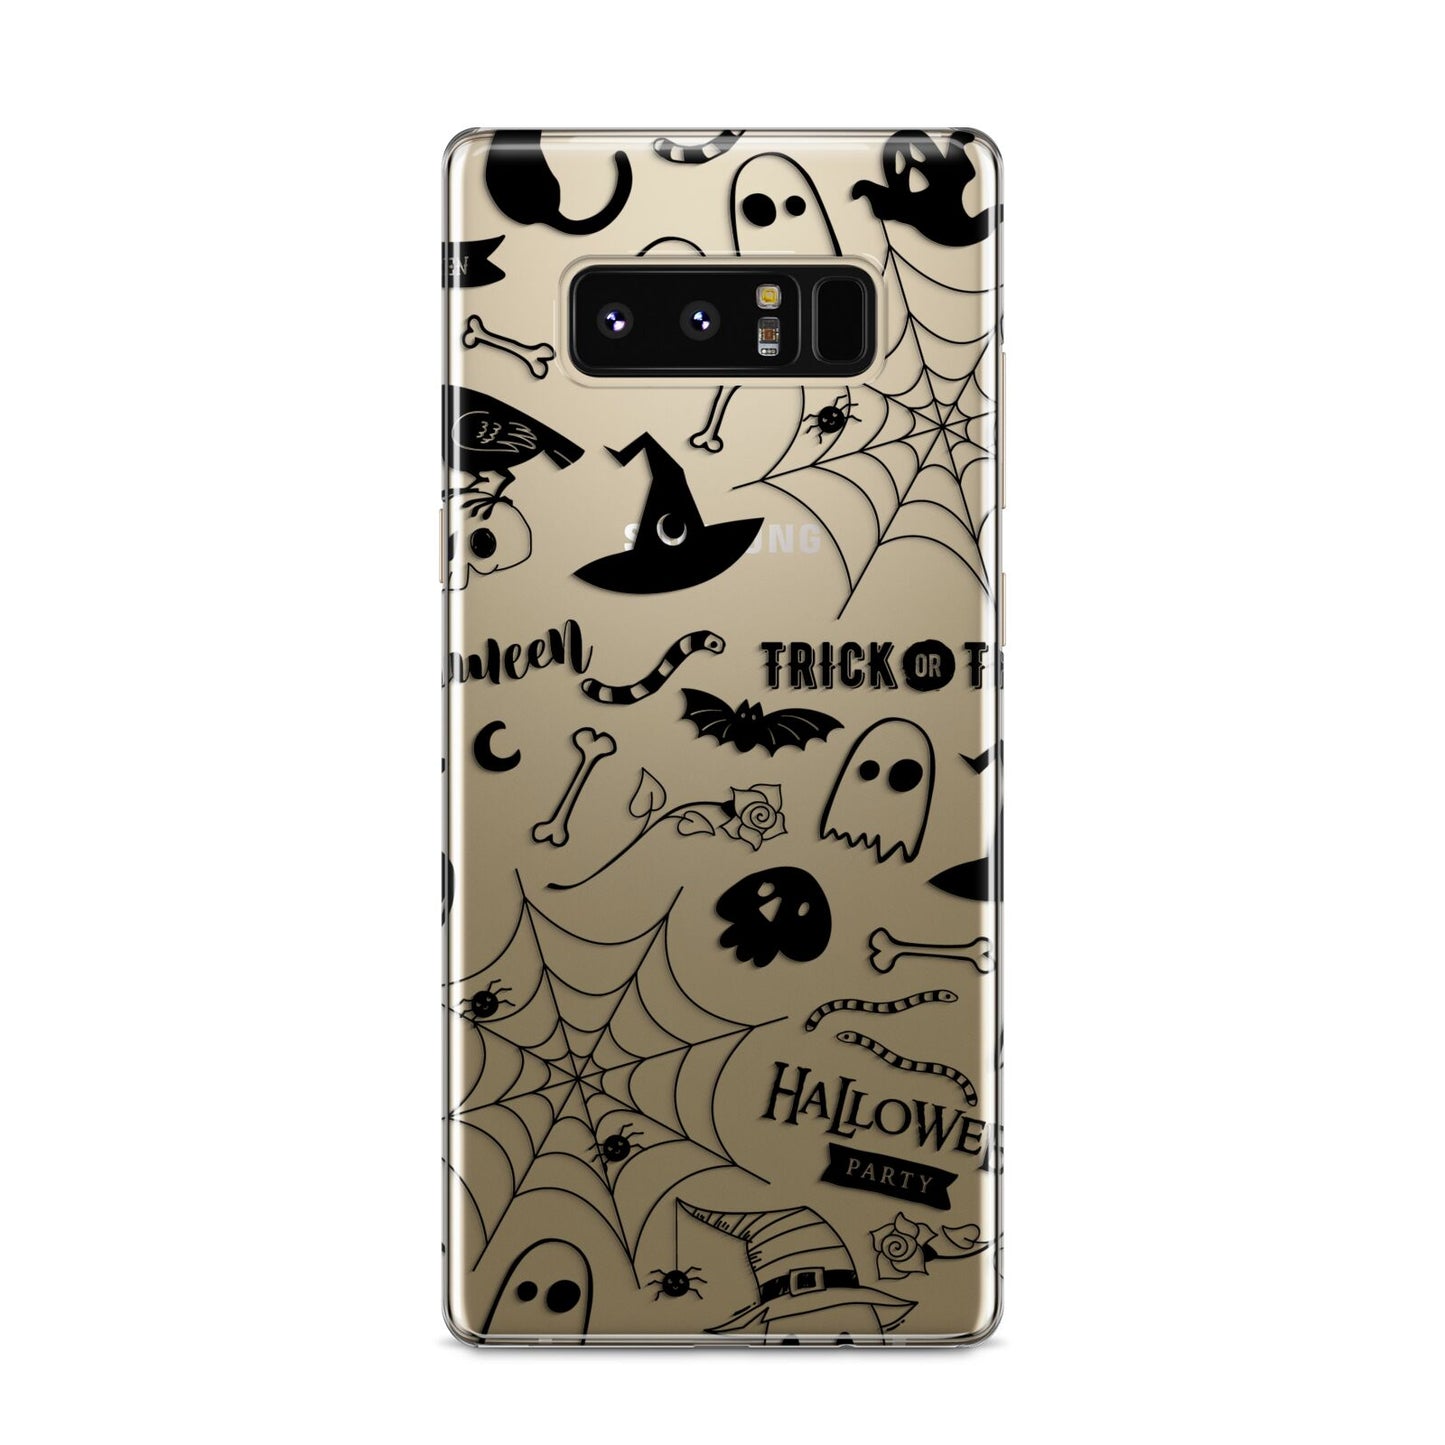 Monochrome Halloween Illustrations Samsung Galaxy S8 Case